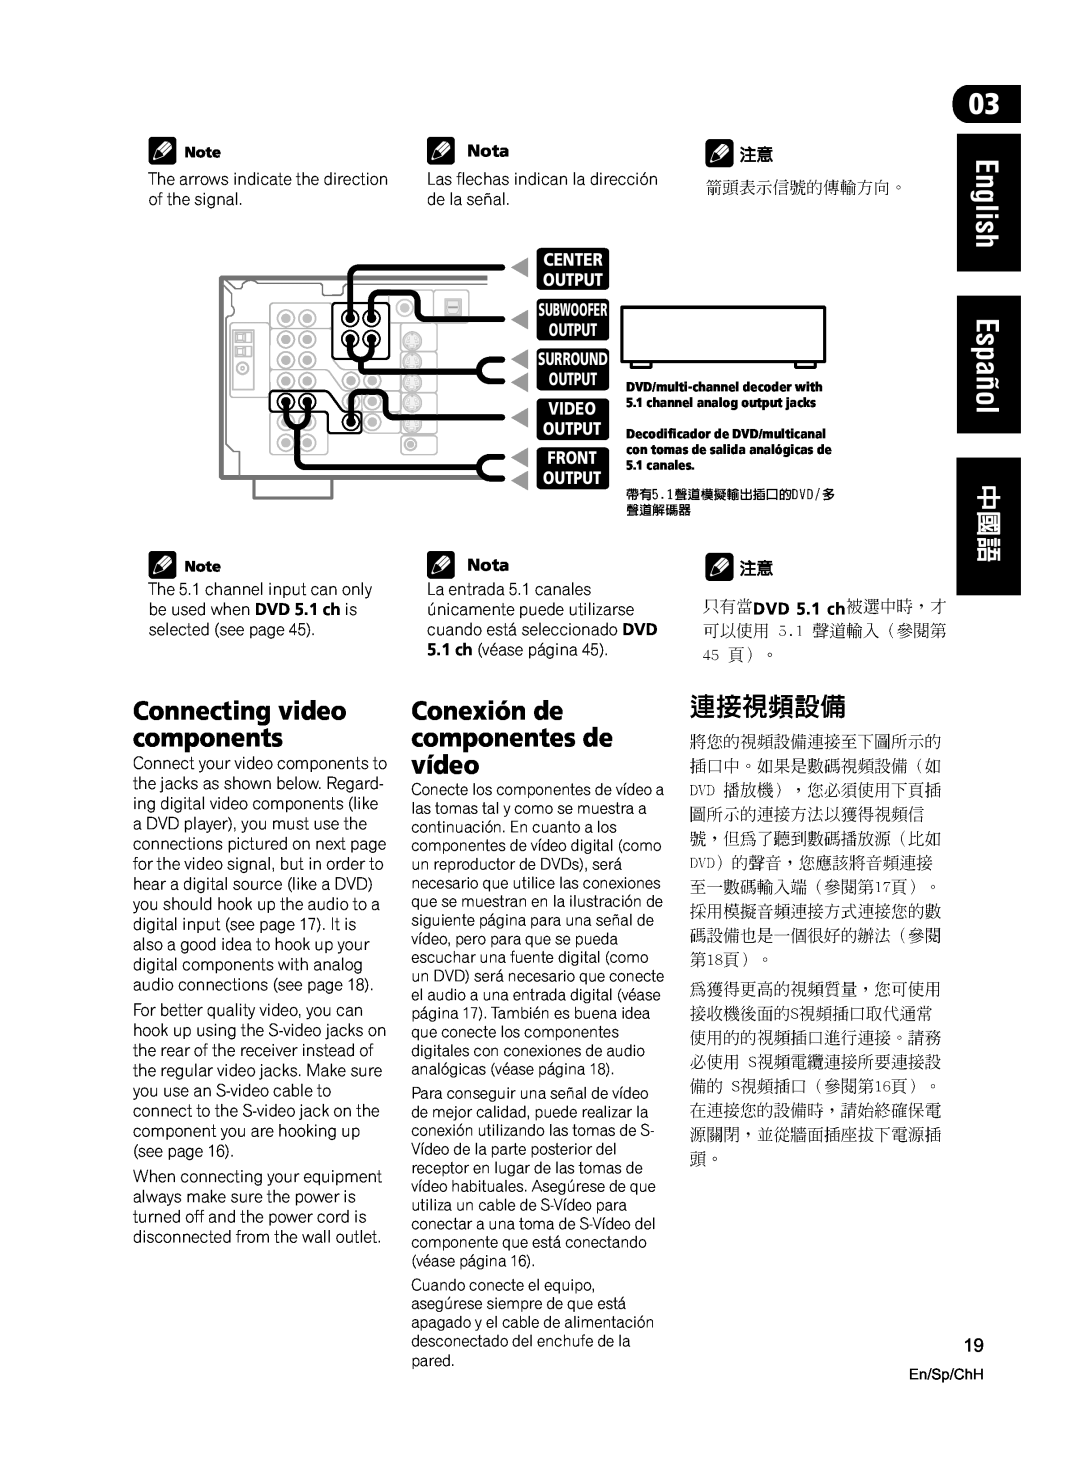 Pioneer VSX-D512-S, VSX-D512-K manual Conexión de componentes de vídeo, Connecting video components, English Español 